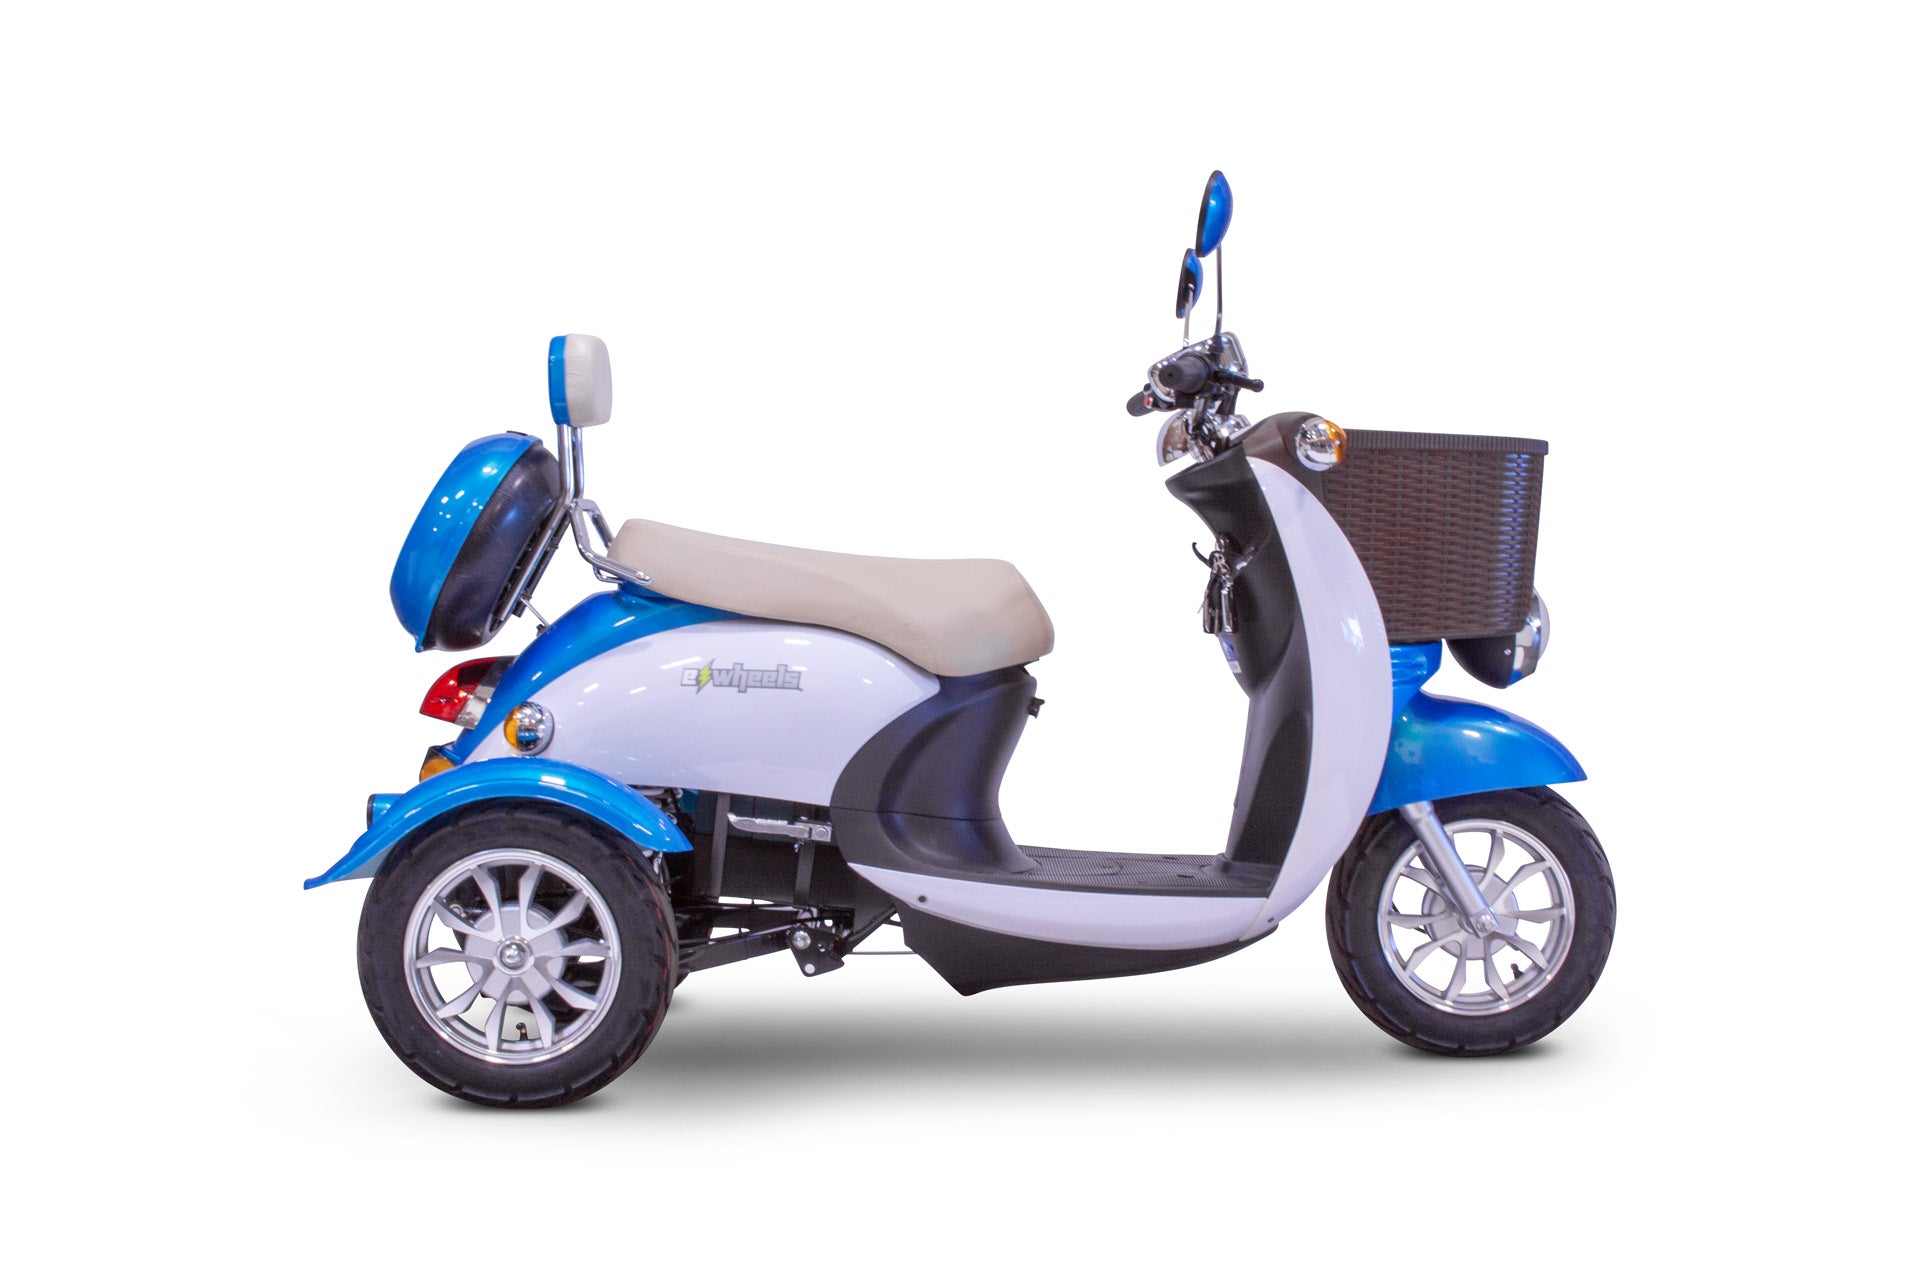 eWheels - 3 Wheel - Recreational Mobility Scooter 400 lbs Weight Capacity - EW-11